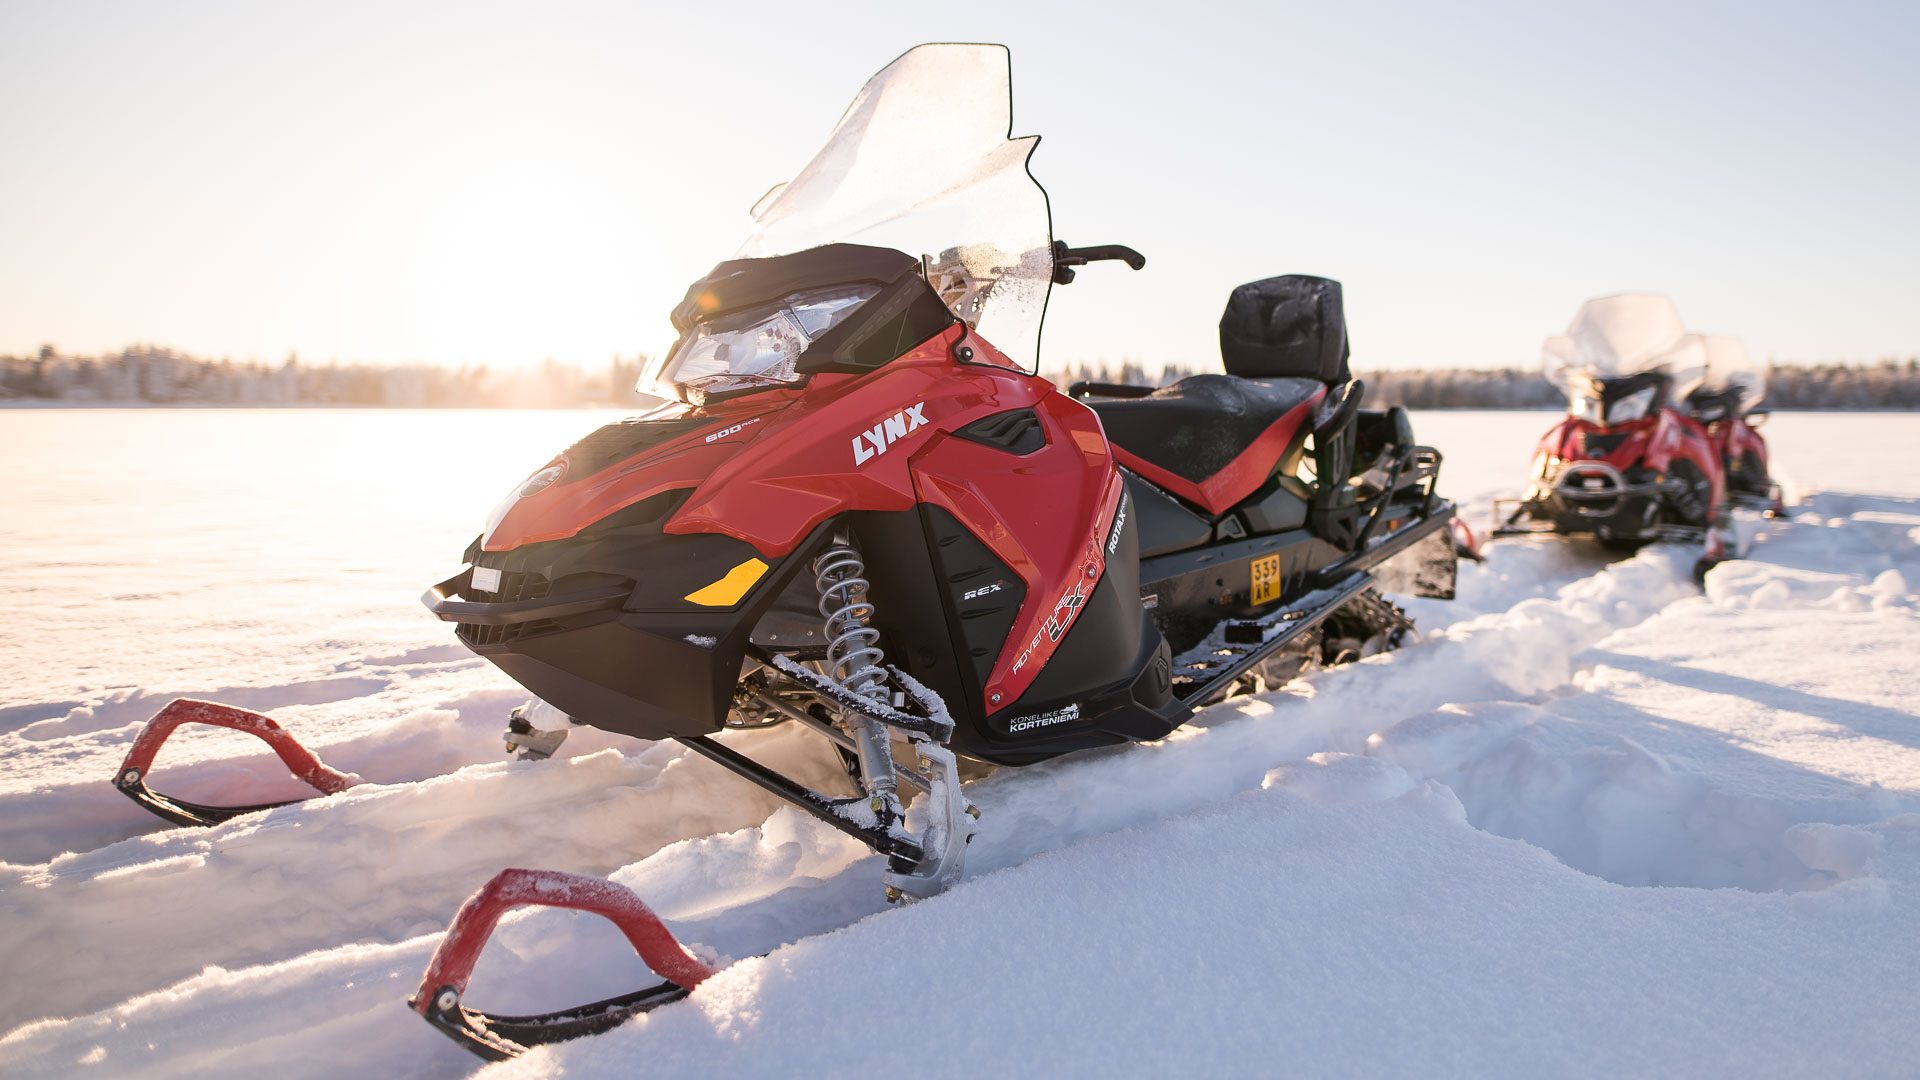 Vuokraa kelkka / Rent a snowmobile – Lynx Adventure; Rovaniemi; Levi; Nurmes; Tahko; Iso-Syöte. Wild Nordic Finland @wildnordicfinland